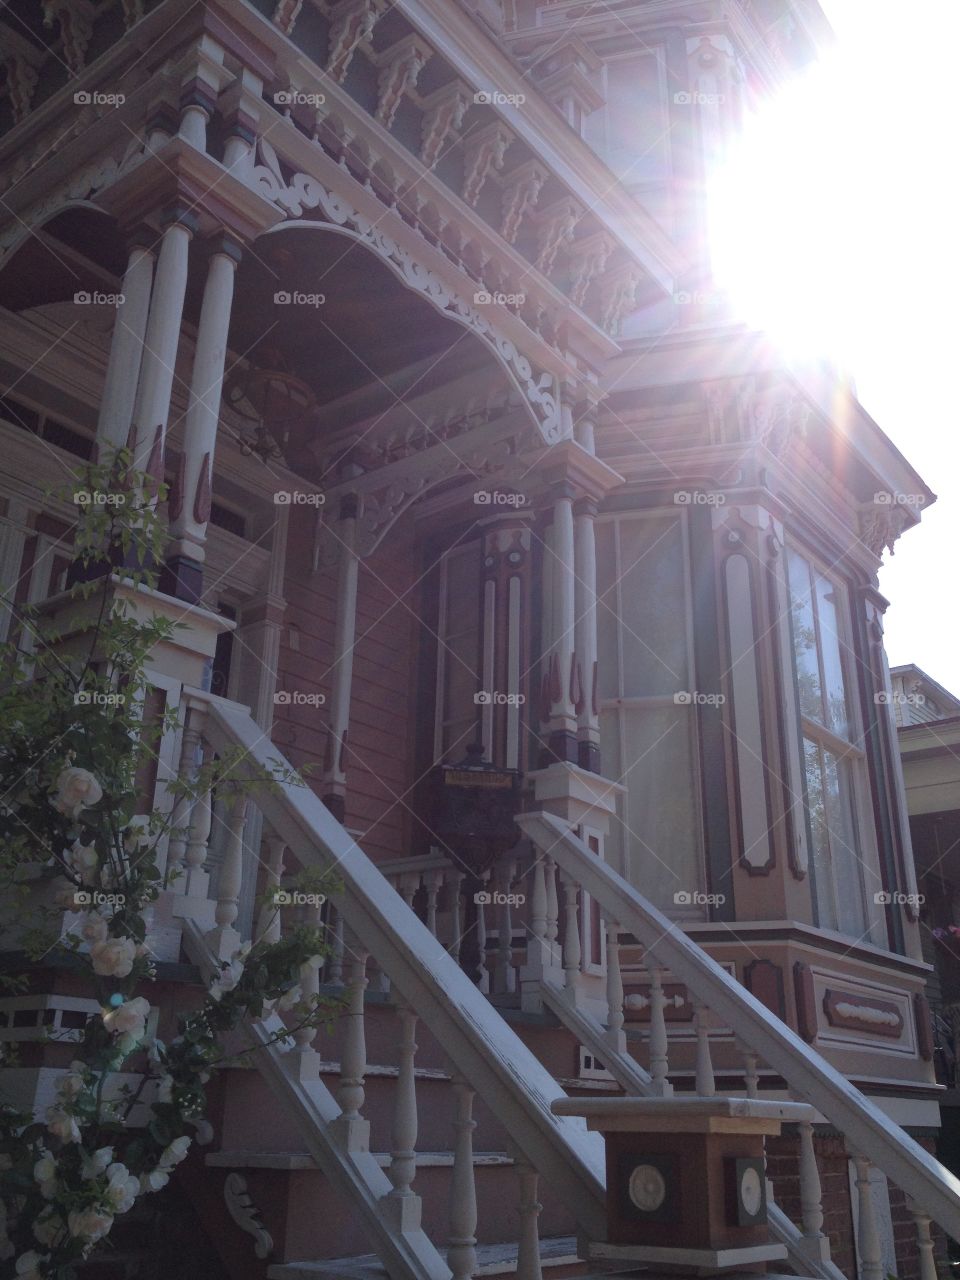 Victorian home in historic Savannah district